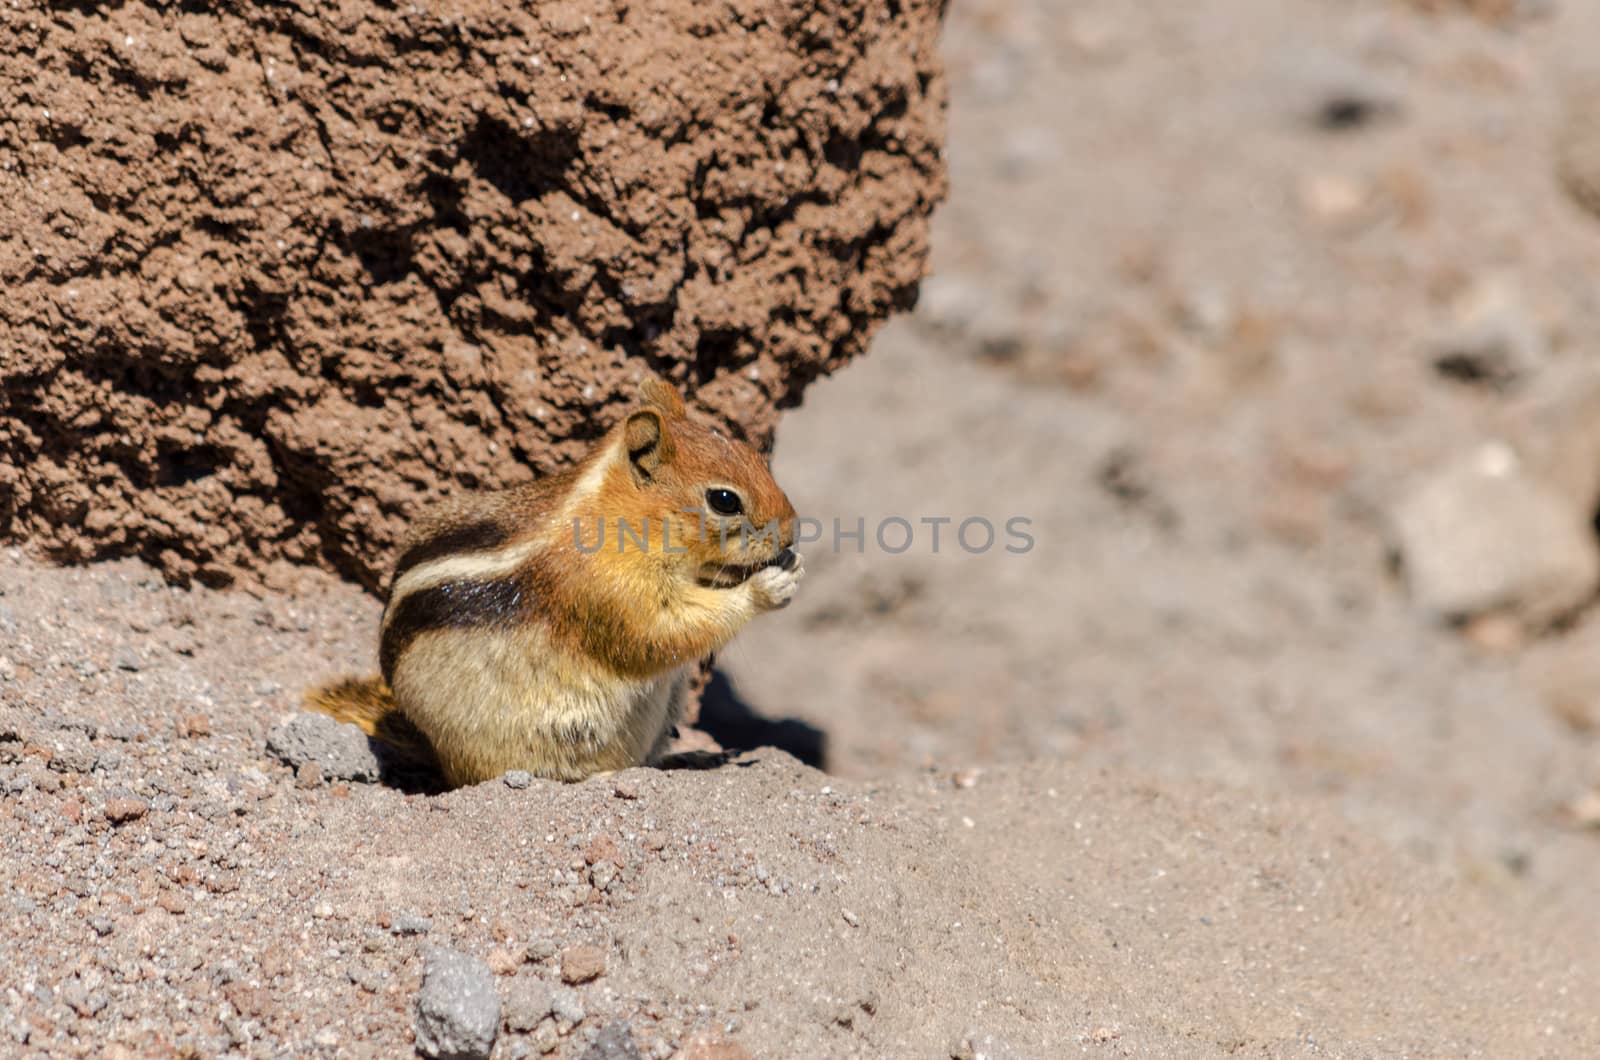 Chipmunk eating surrounded by barren rocks